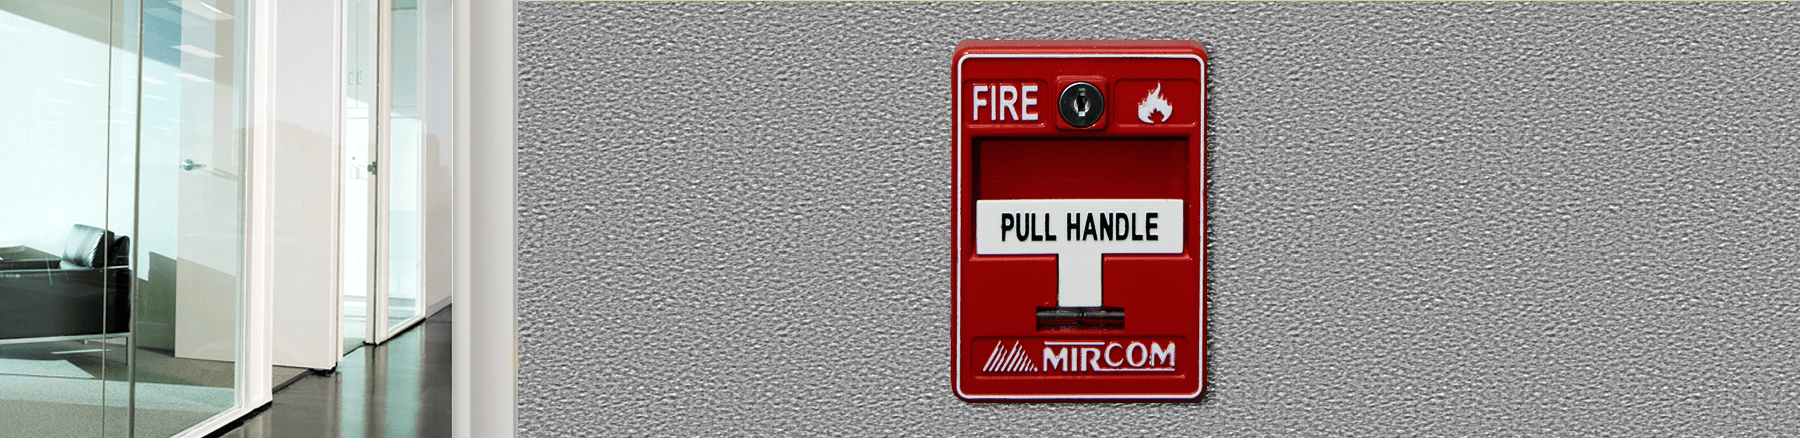 Fire alarm lever